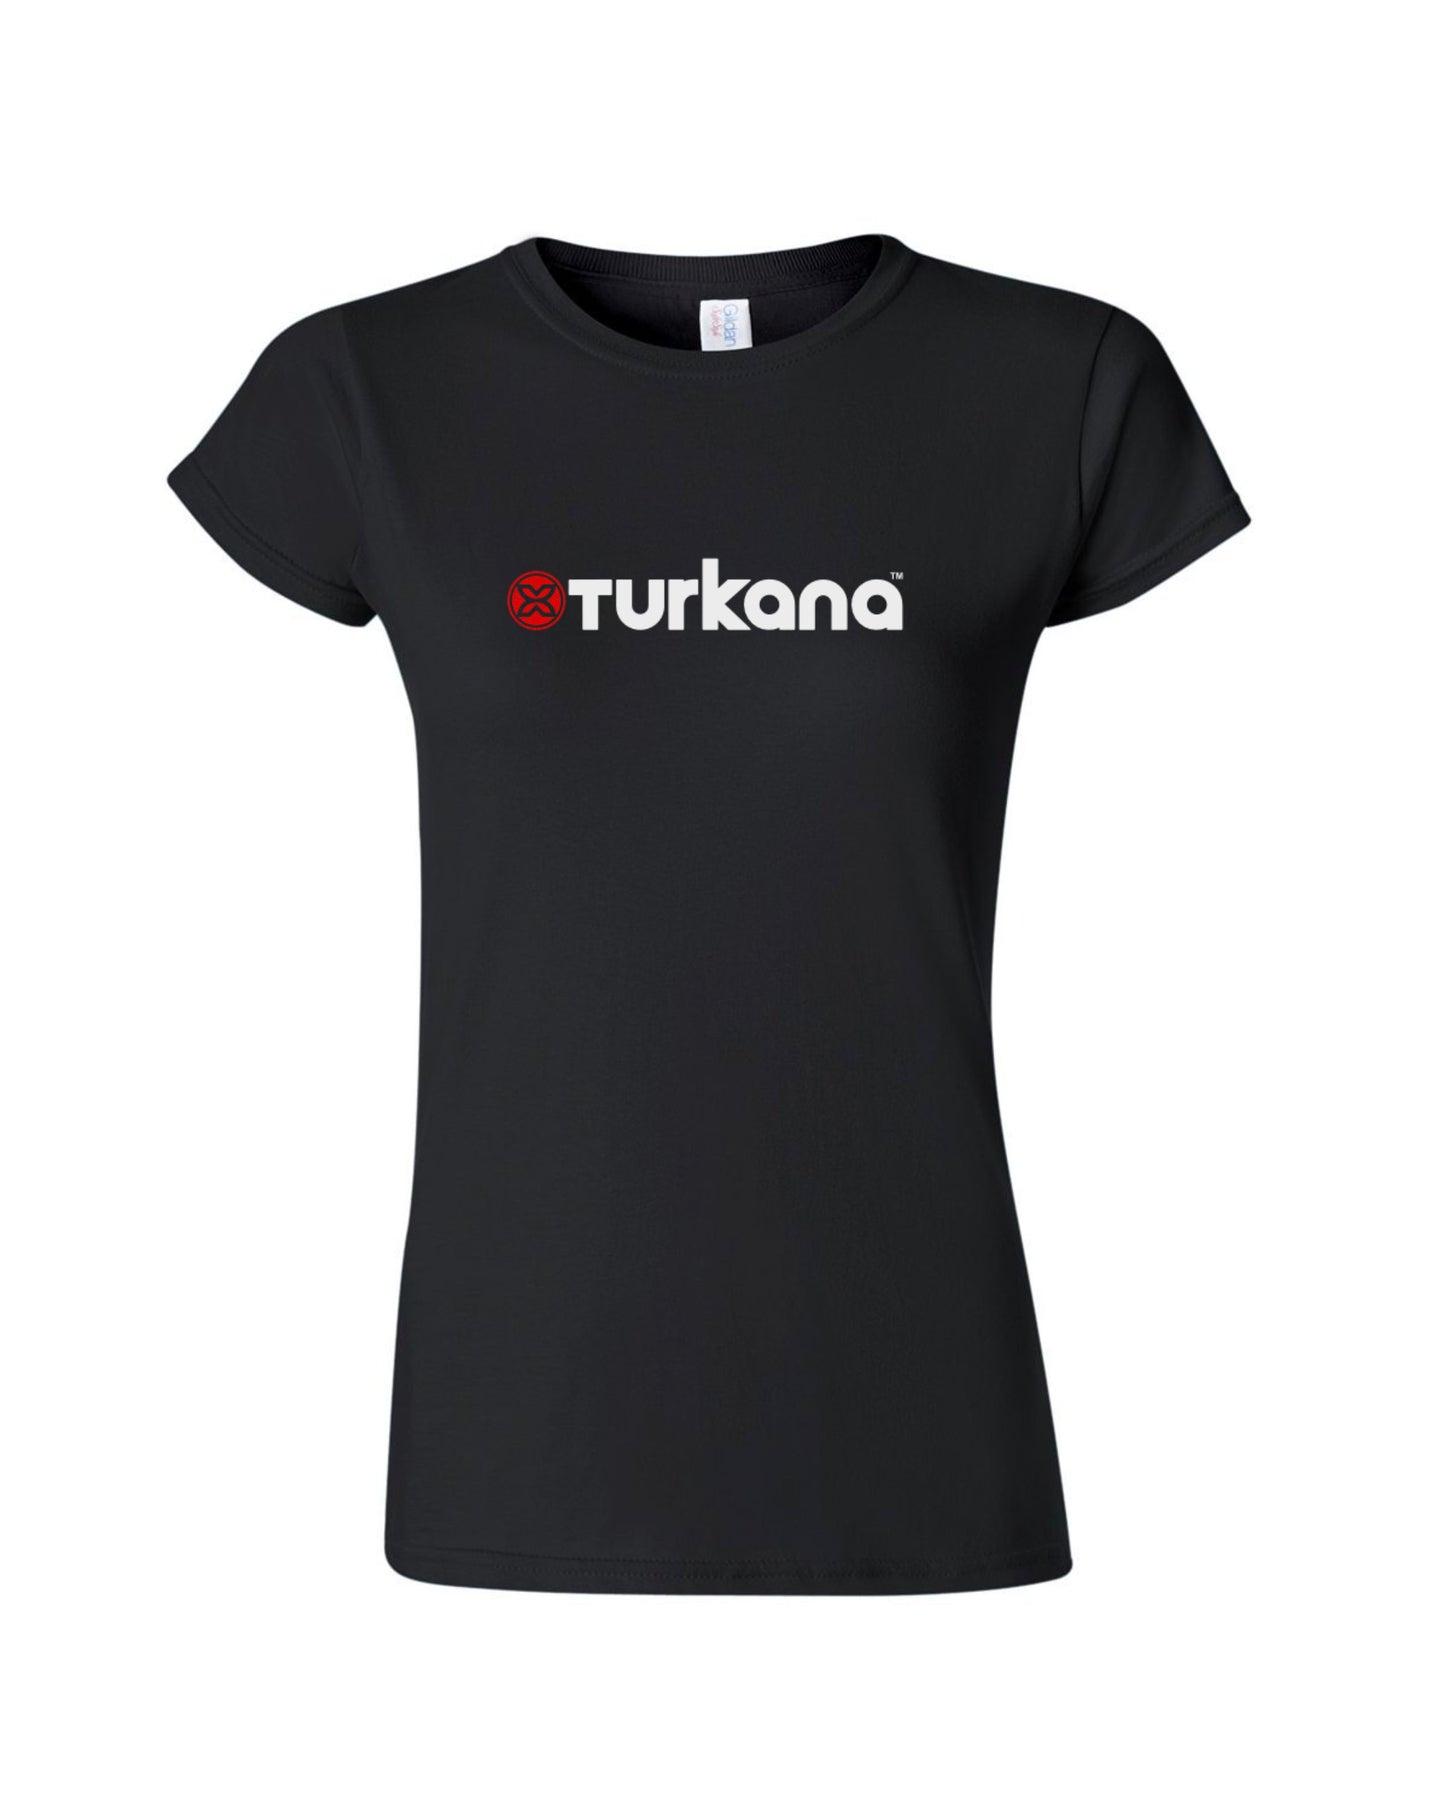 T-Shirt -Women’s with Turkana Logo (Black)